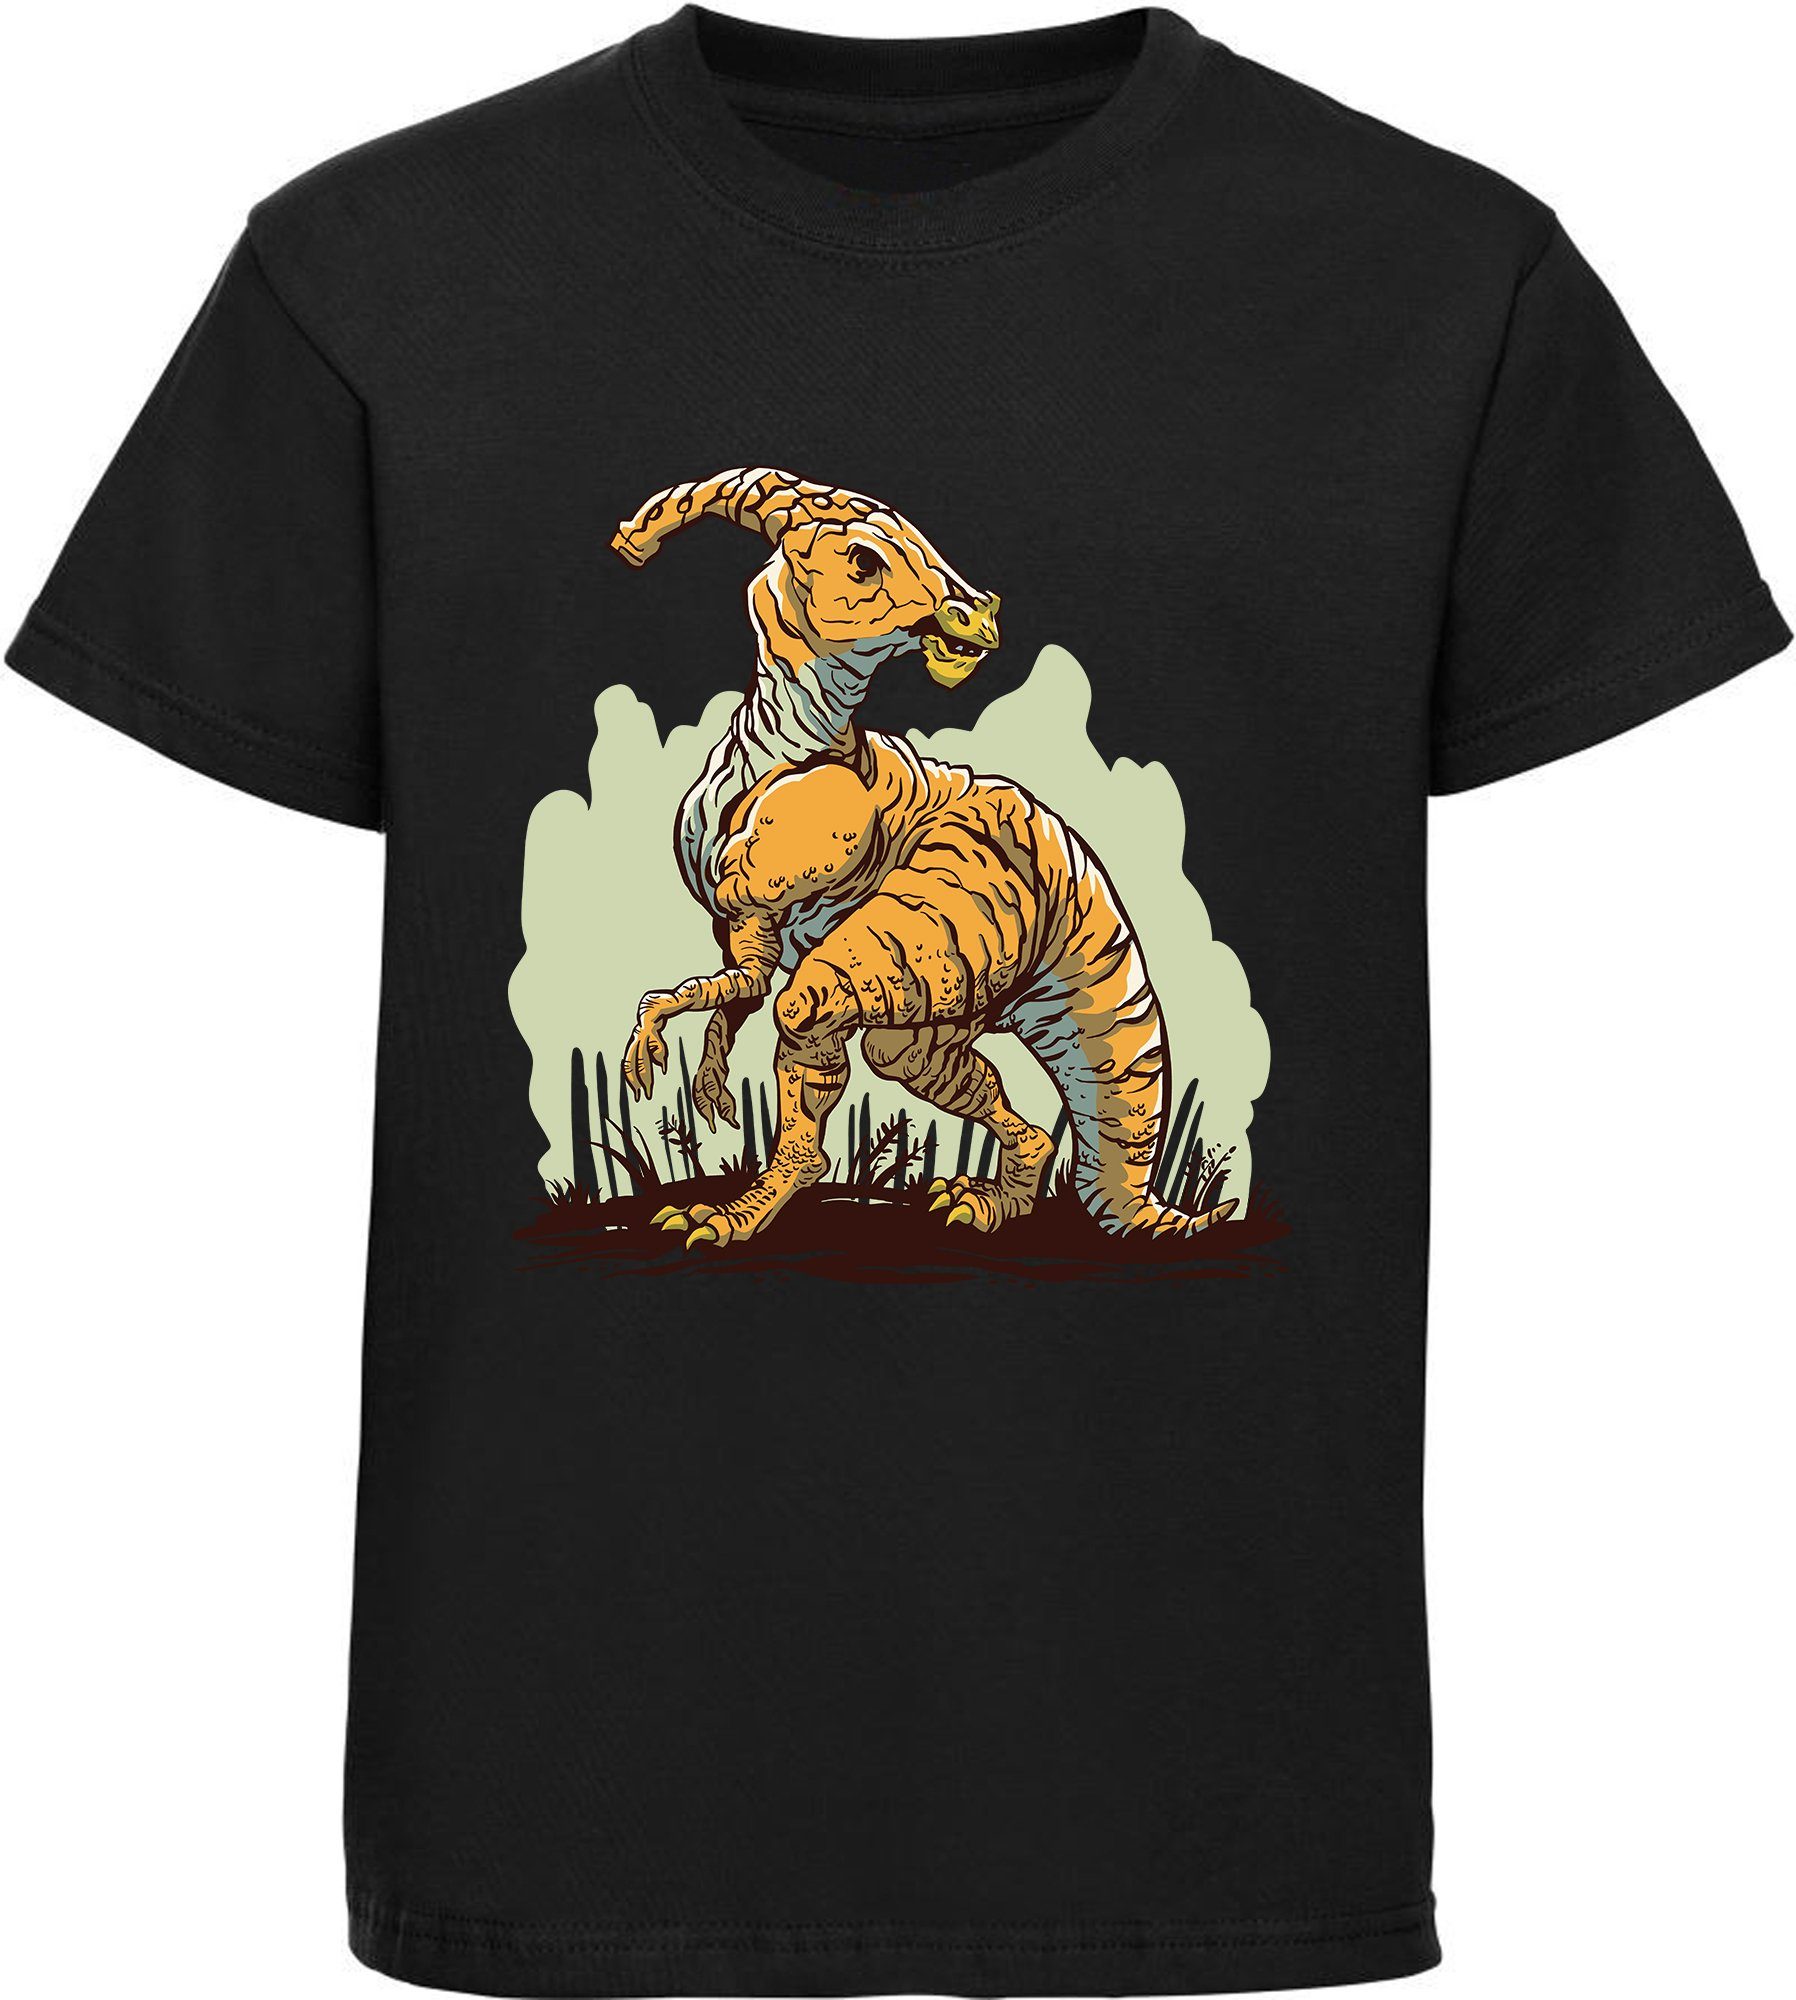 weiß, Kinder Baumwollshirt rot, Print-Shirt i99 bedrucktes Dino, Parasaurolophus schwarz, MyDesign24 T-Shirt mit blau,